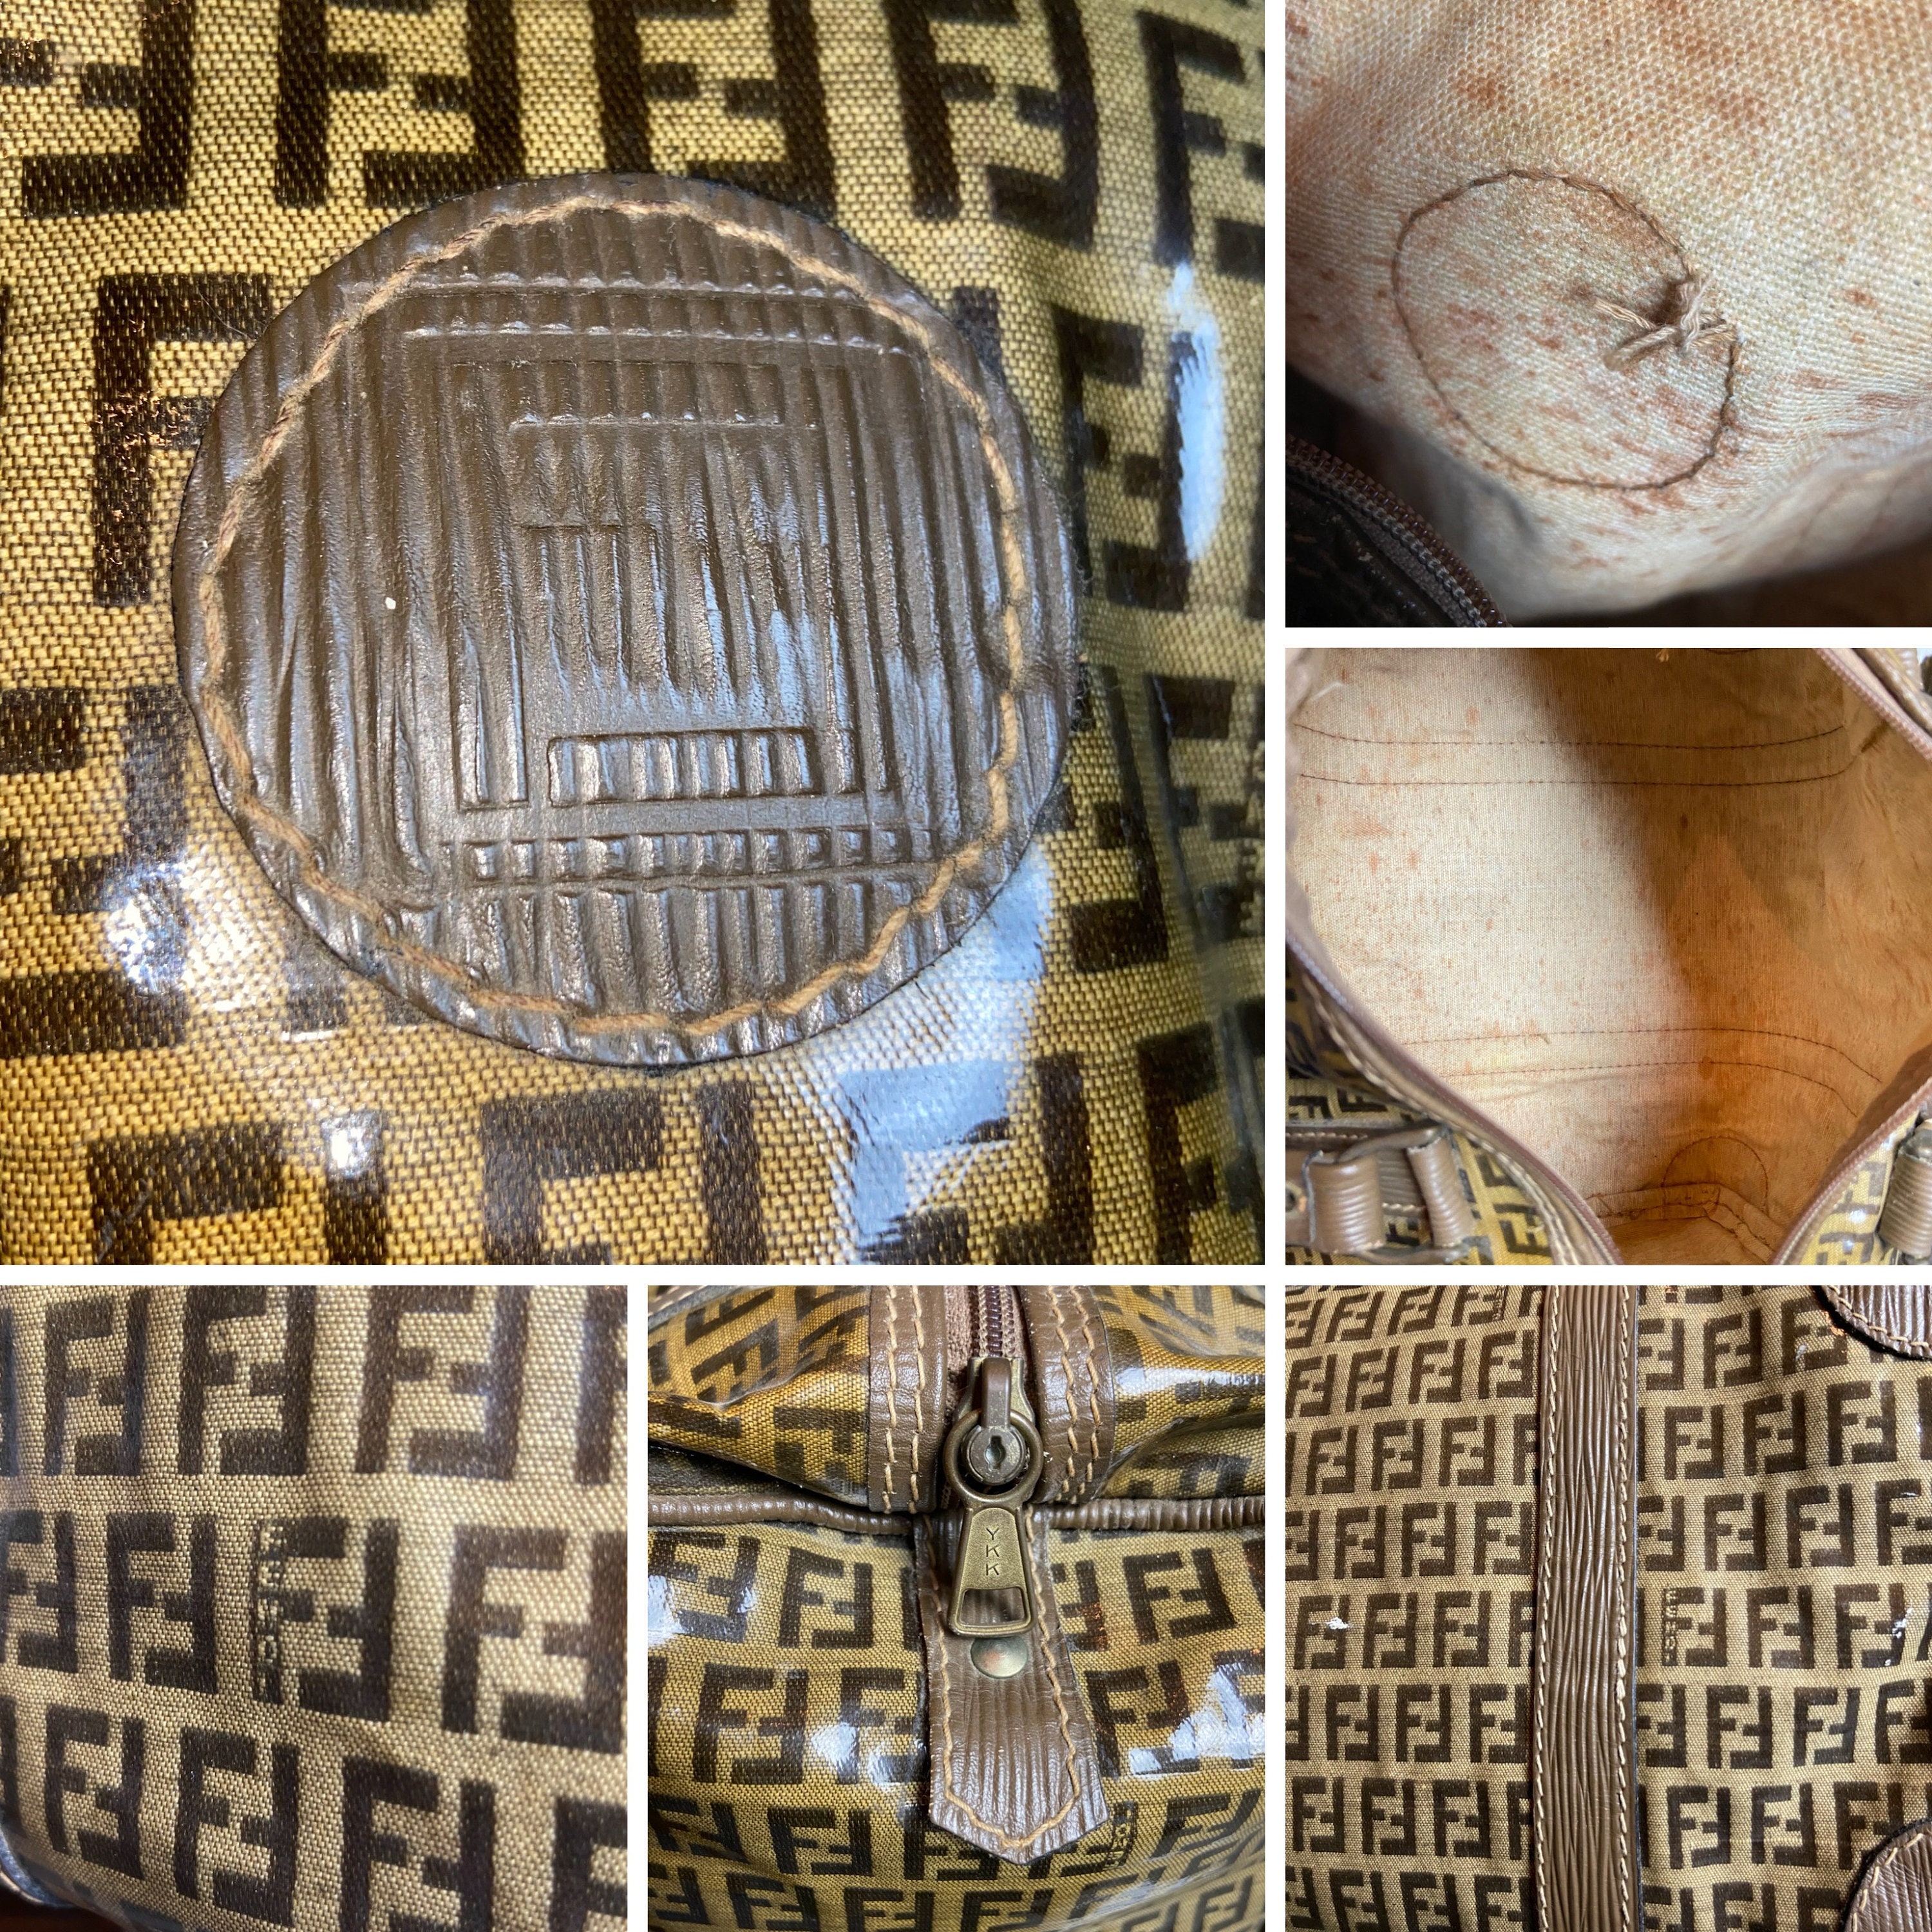 Fendi Monogram Iconic Patent Leather Duffel Speedy Bag / 